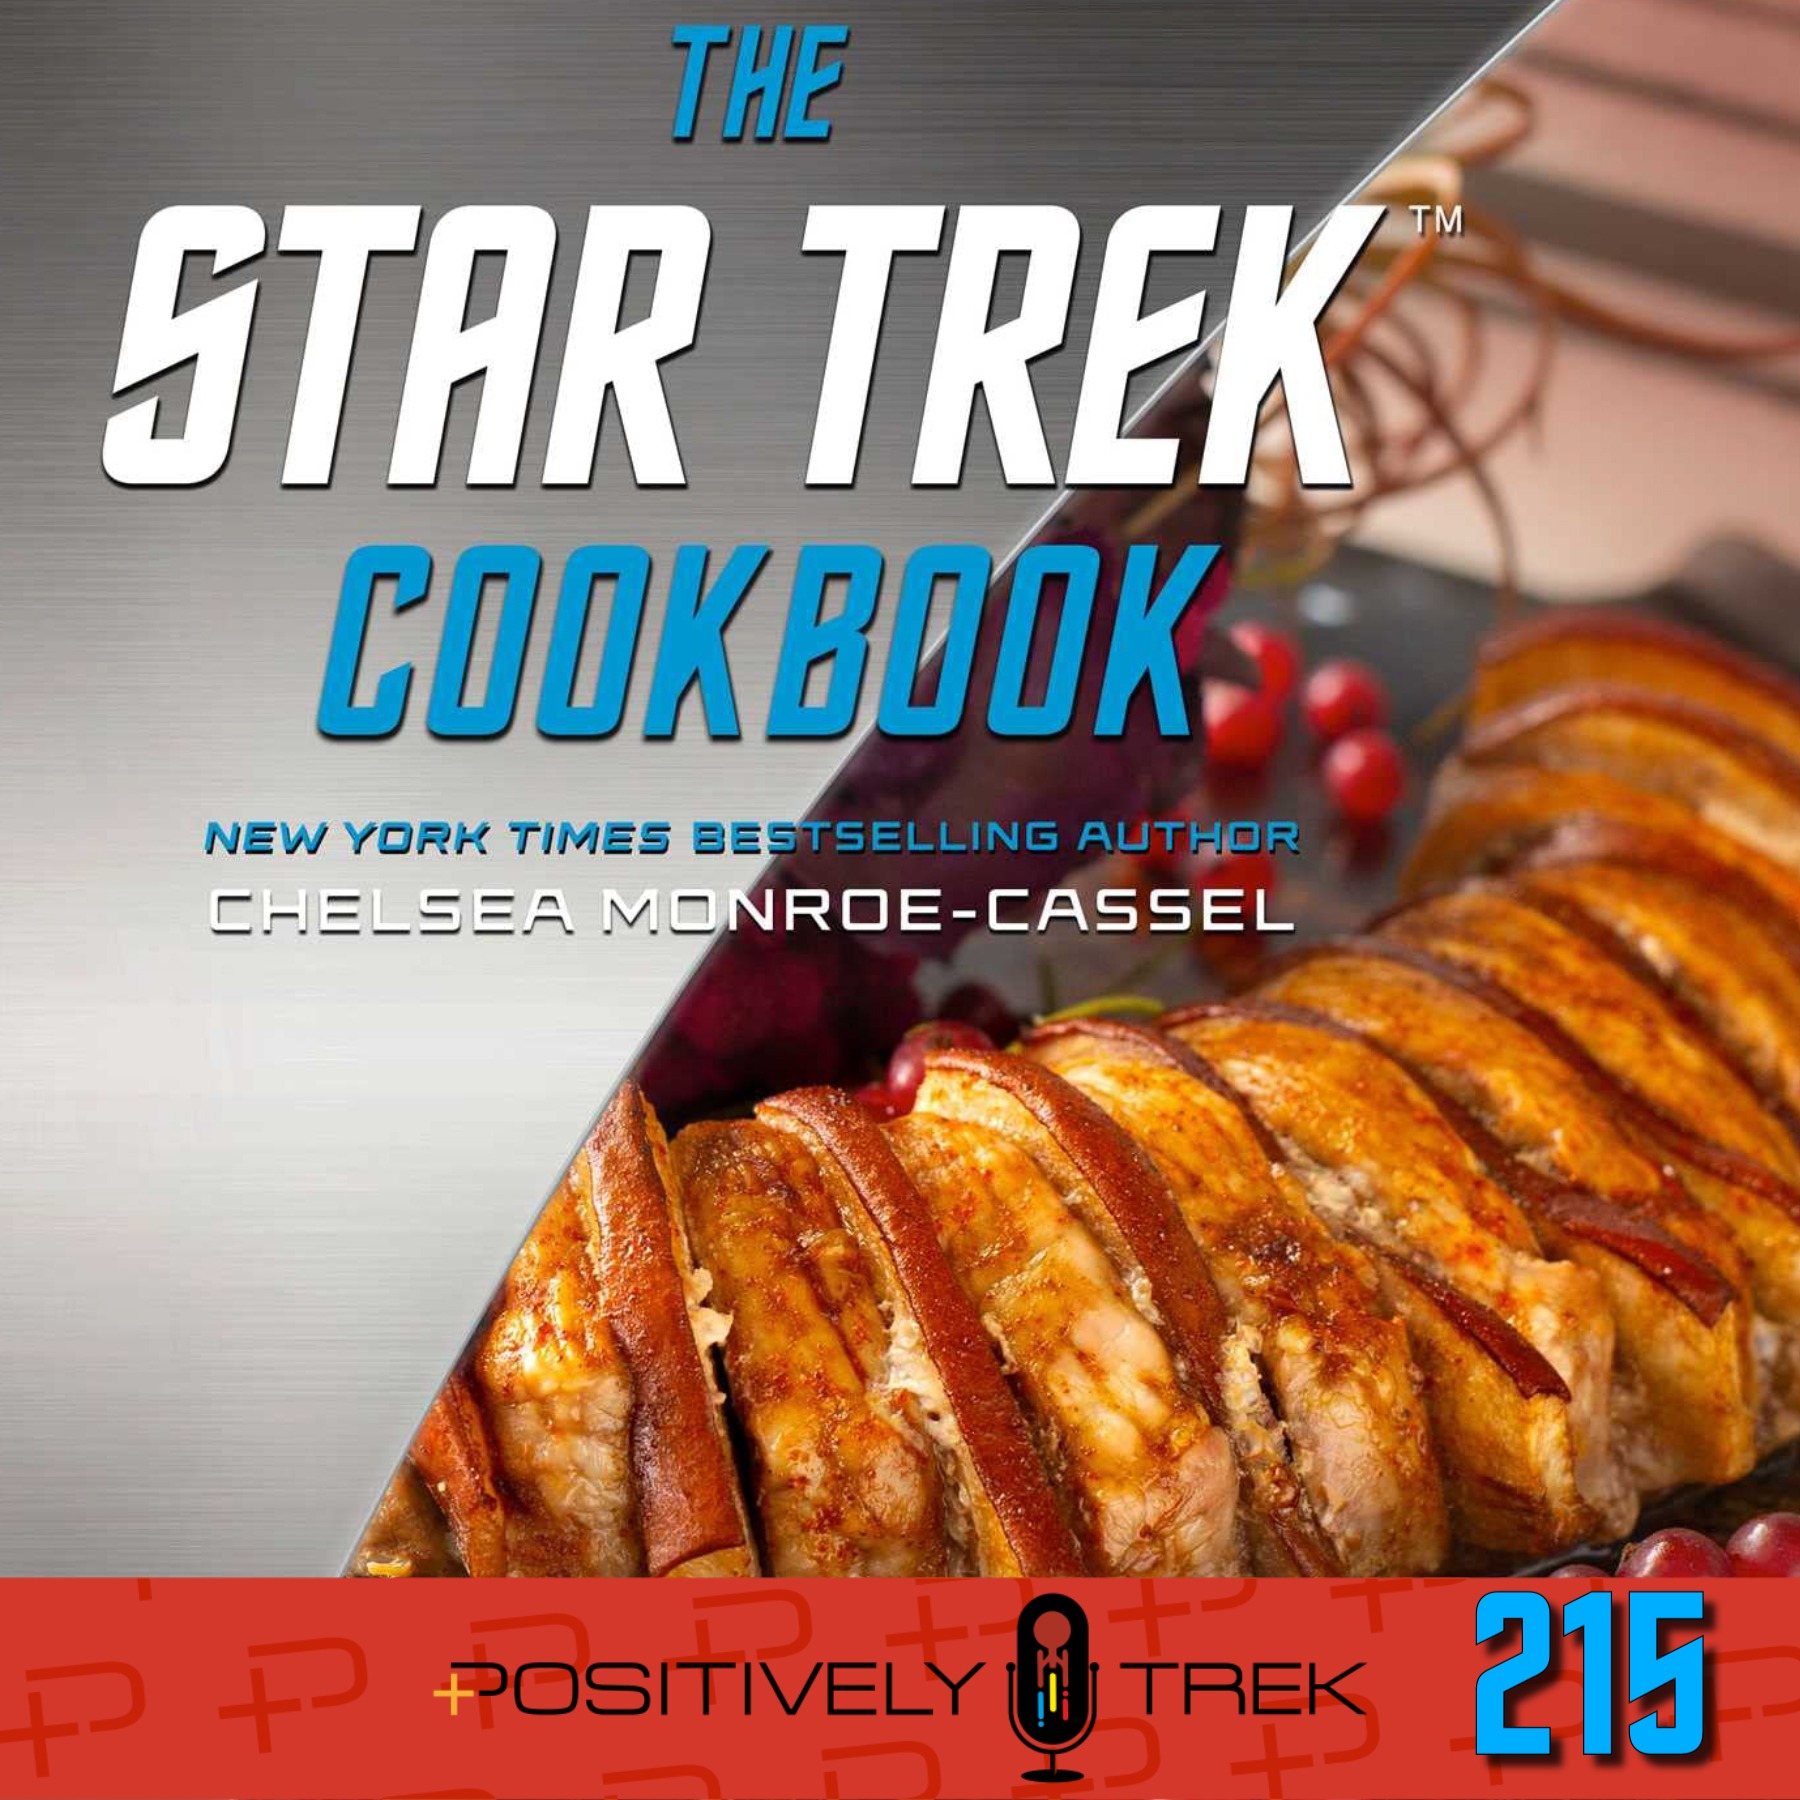 Book Club: The Star Trek Cookbook Image